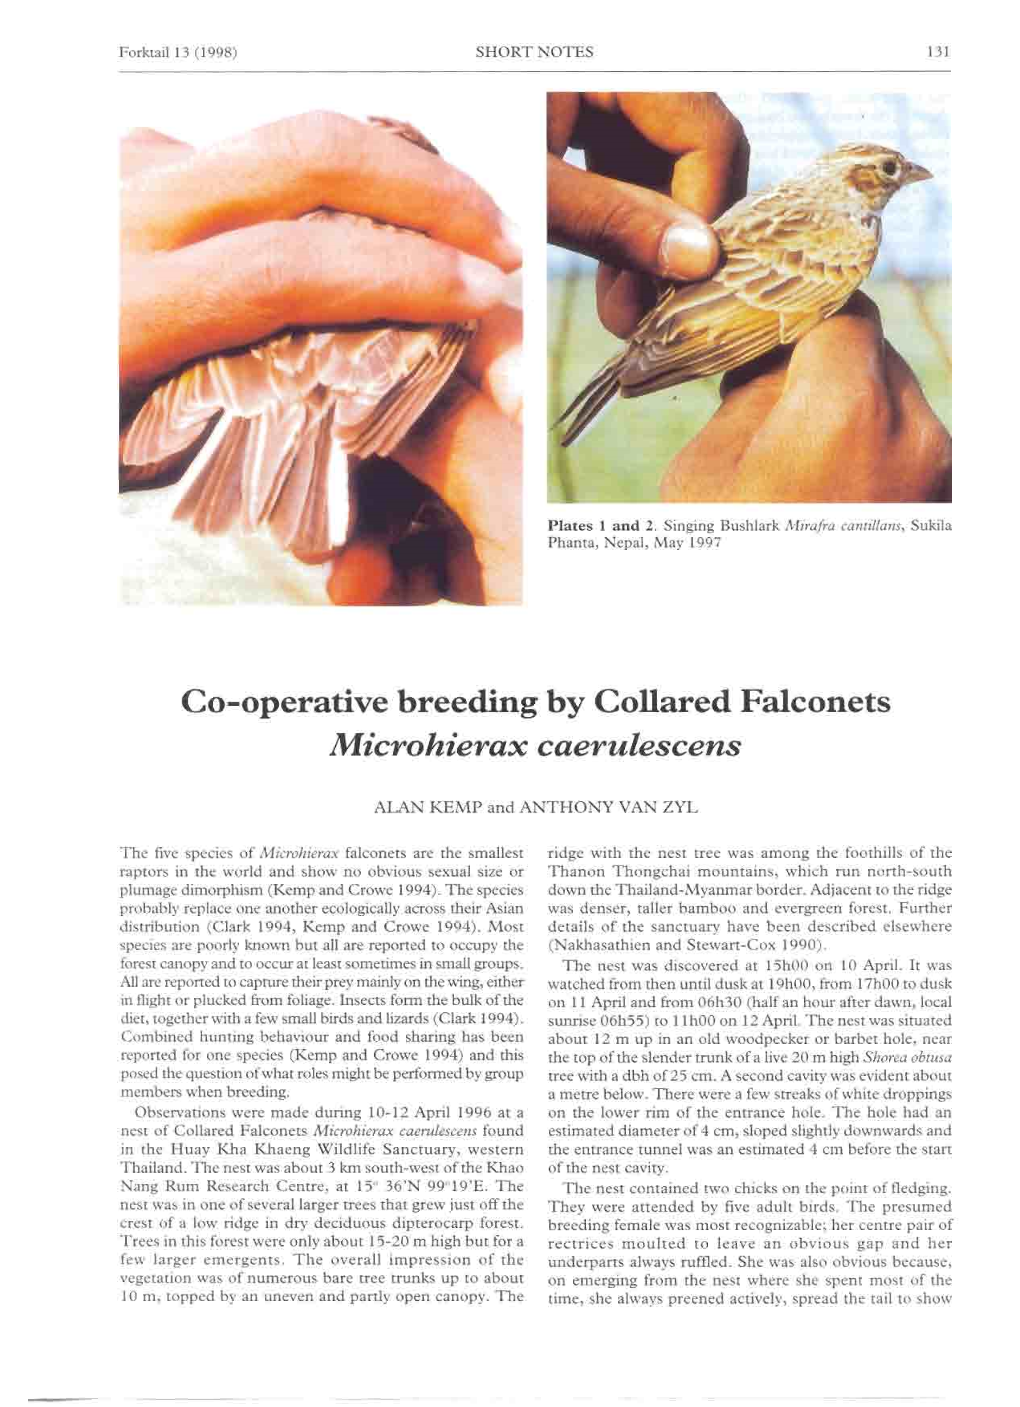 Co-Operative Breeding by Collared Falconets, Microhierax Caerulescens